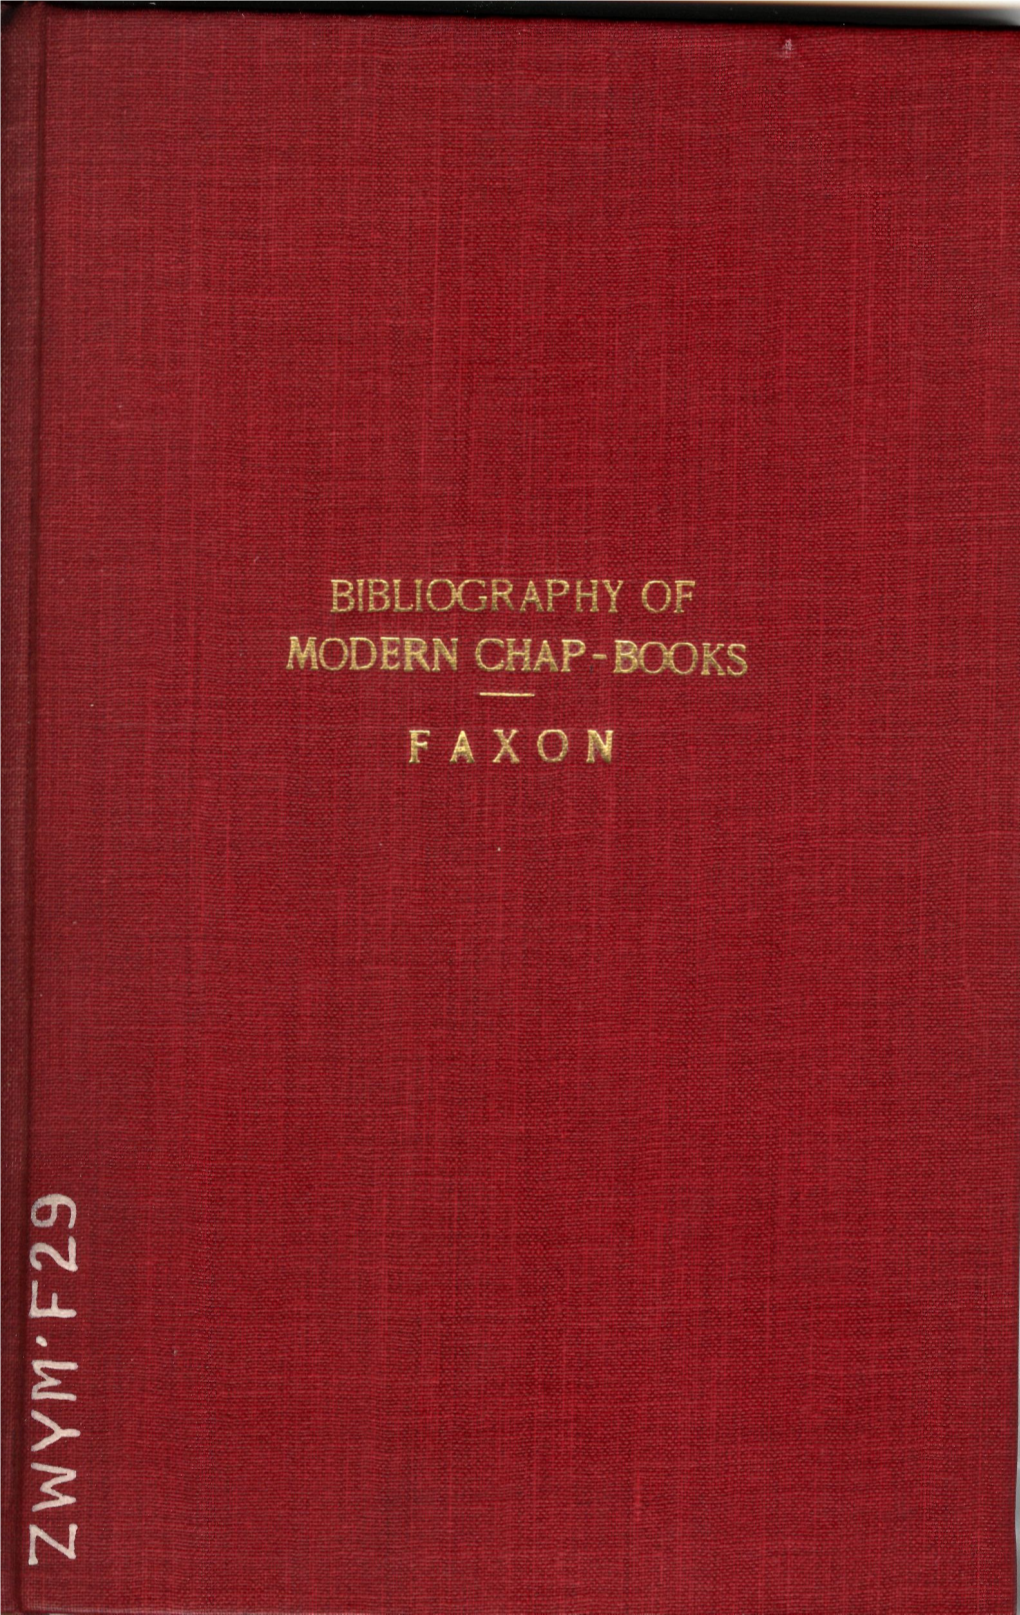 Ephemeral Bibelots: a Bibliography of the Modern Chap-Books and Their Imitators